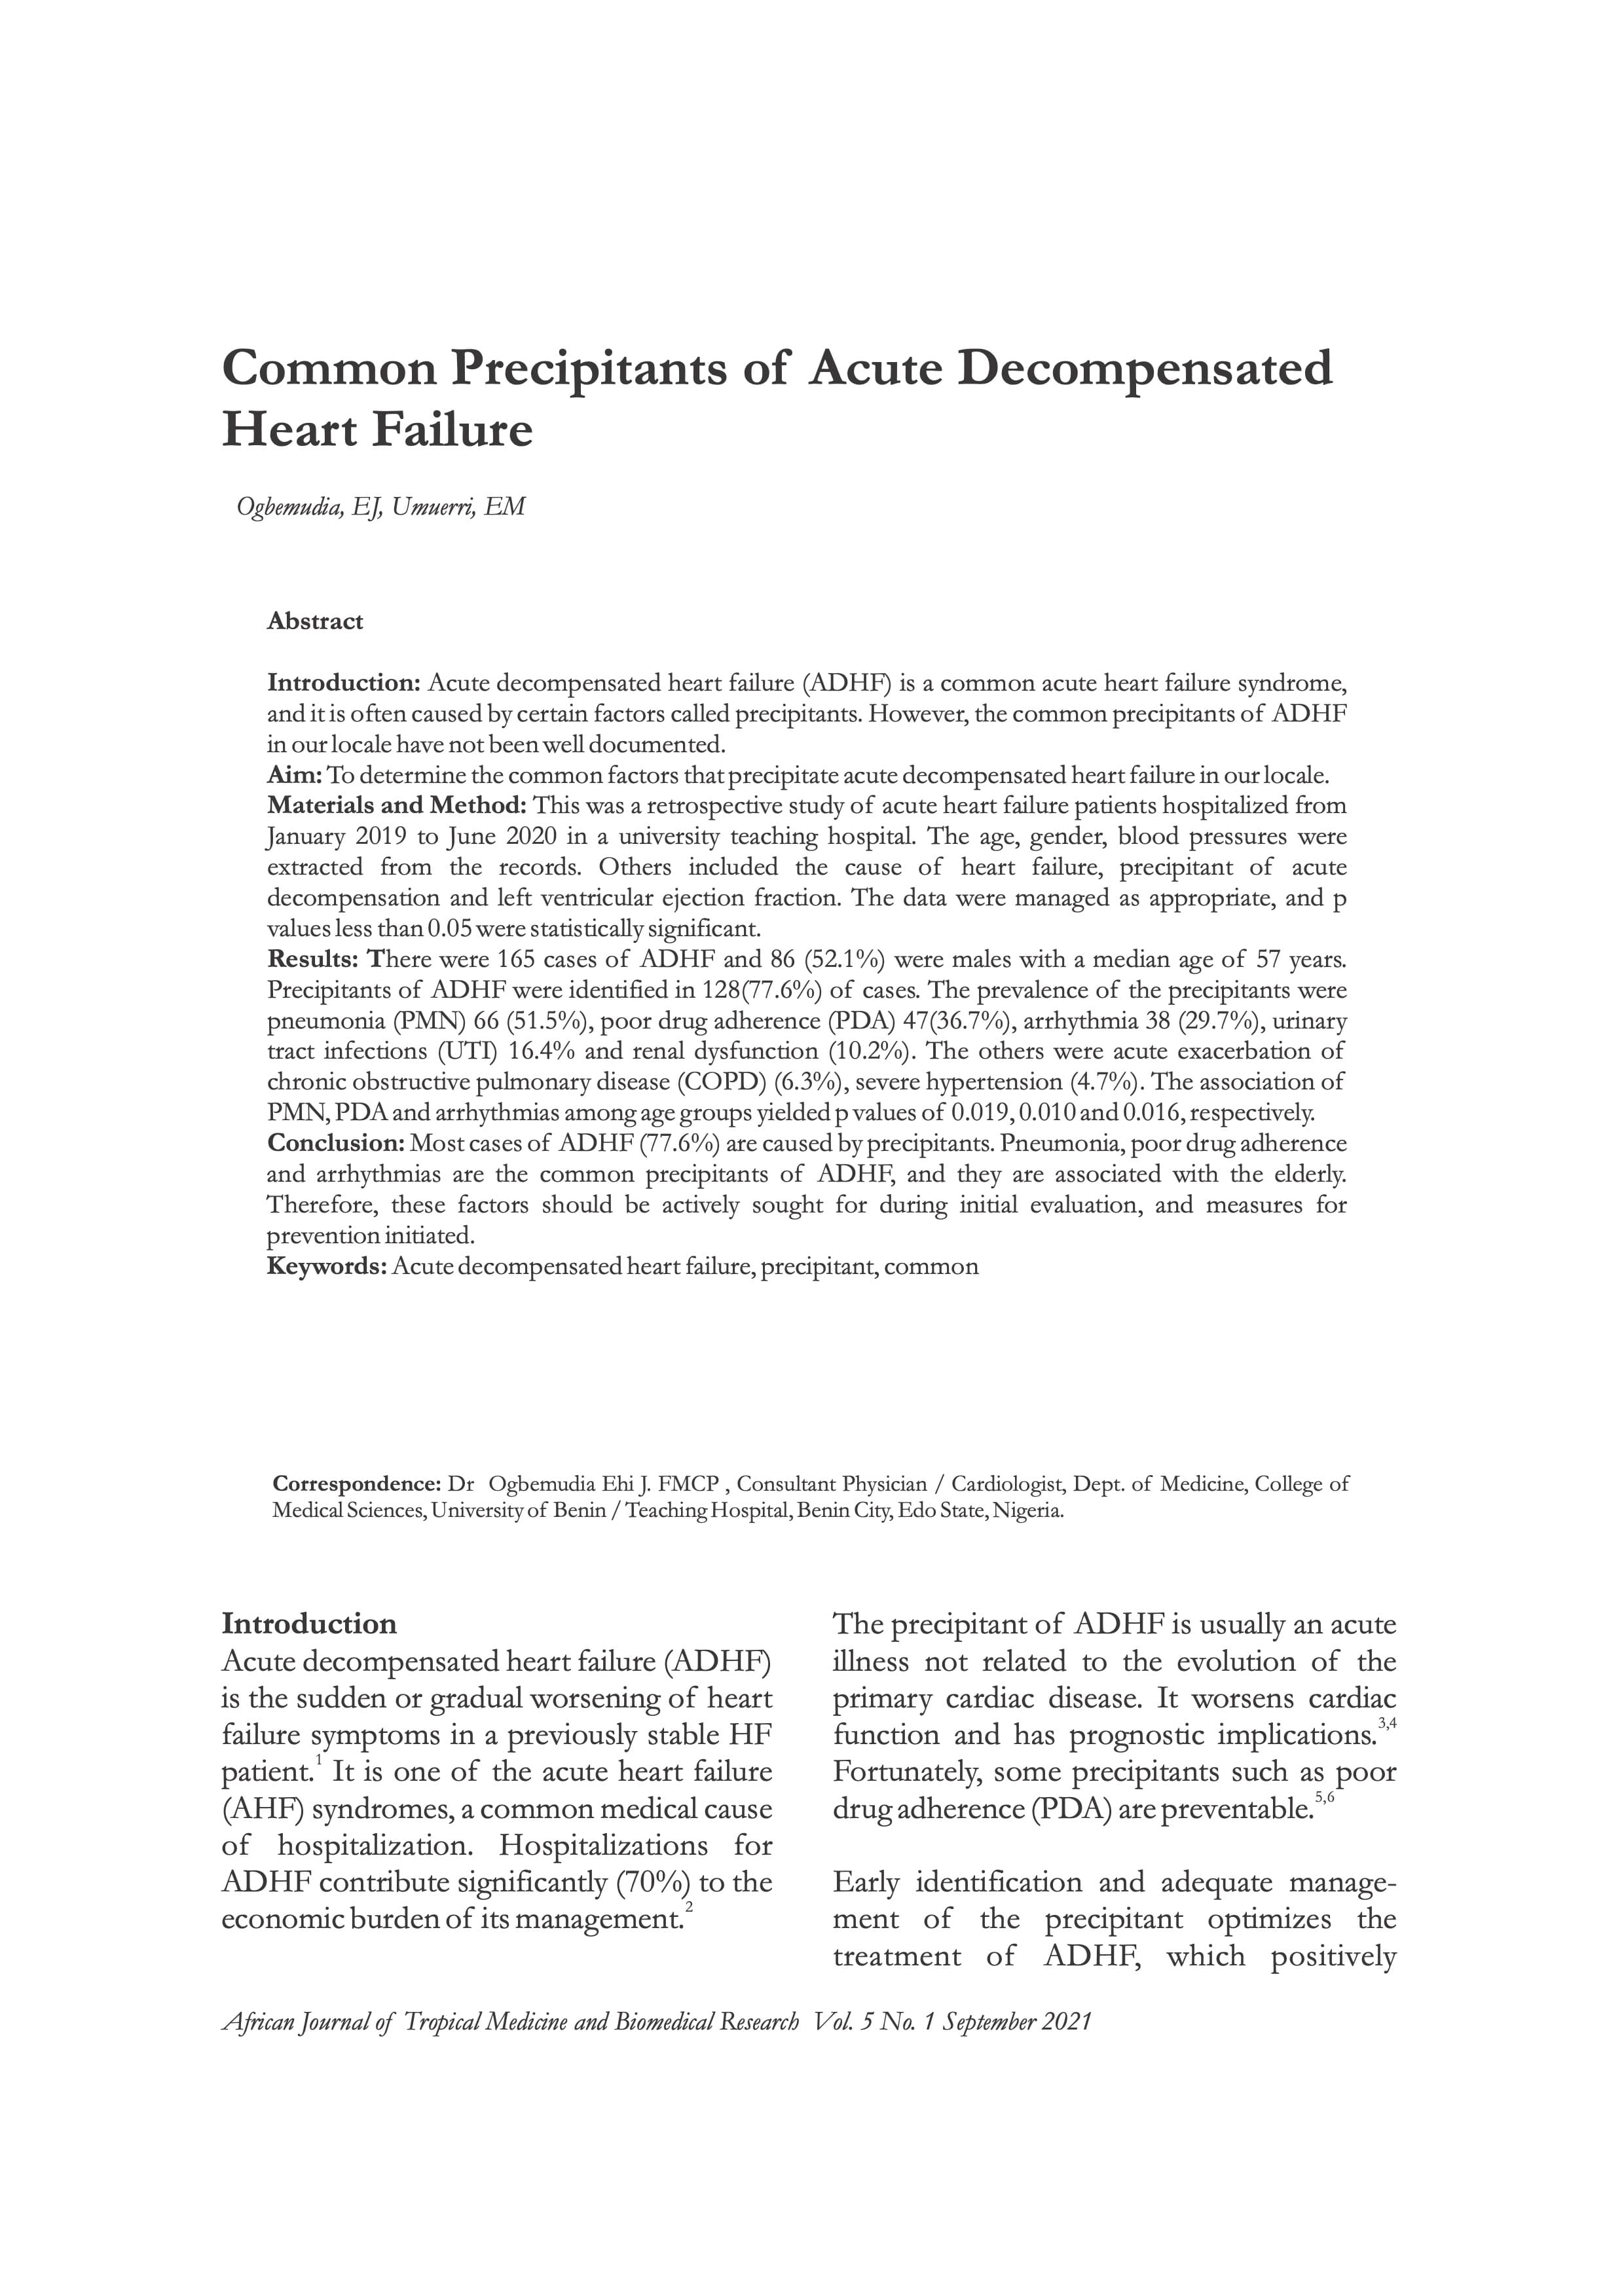 Common Precipitants of Acute Decompensated Heart Failure